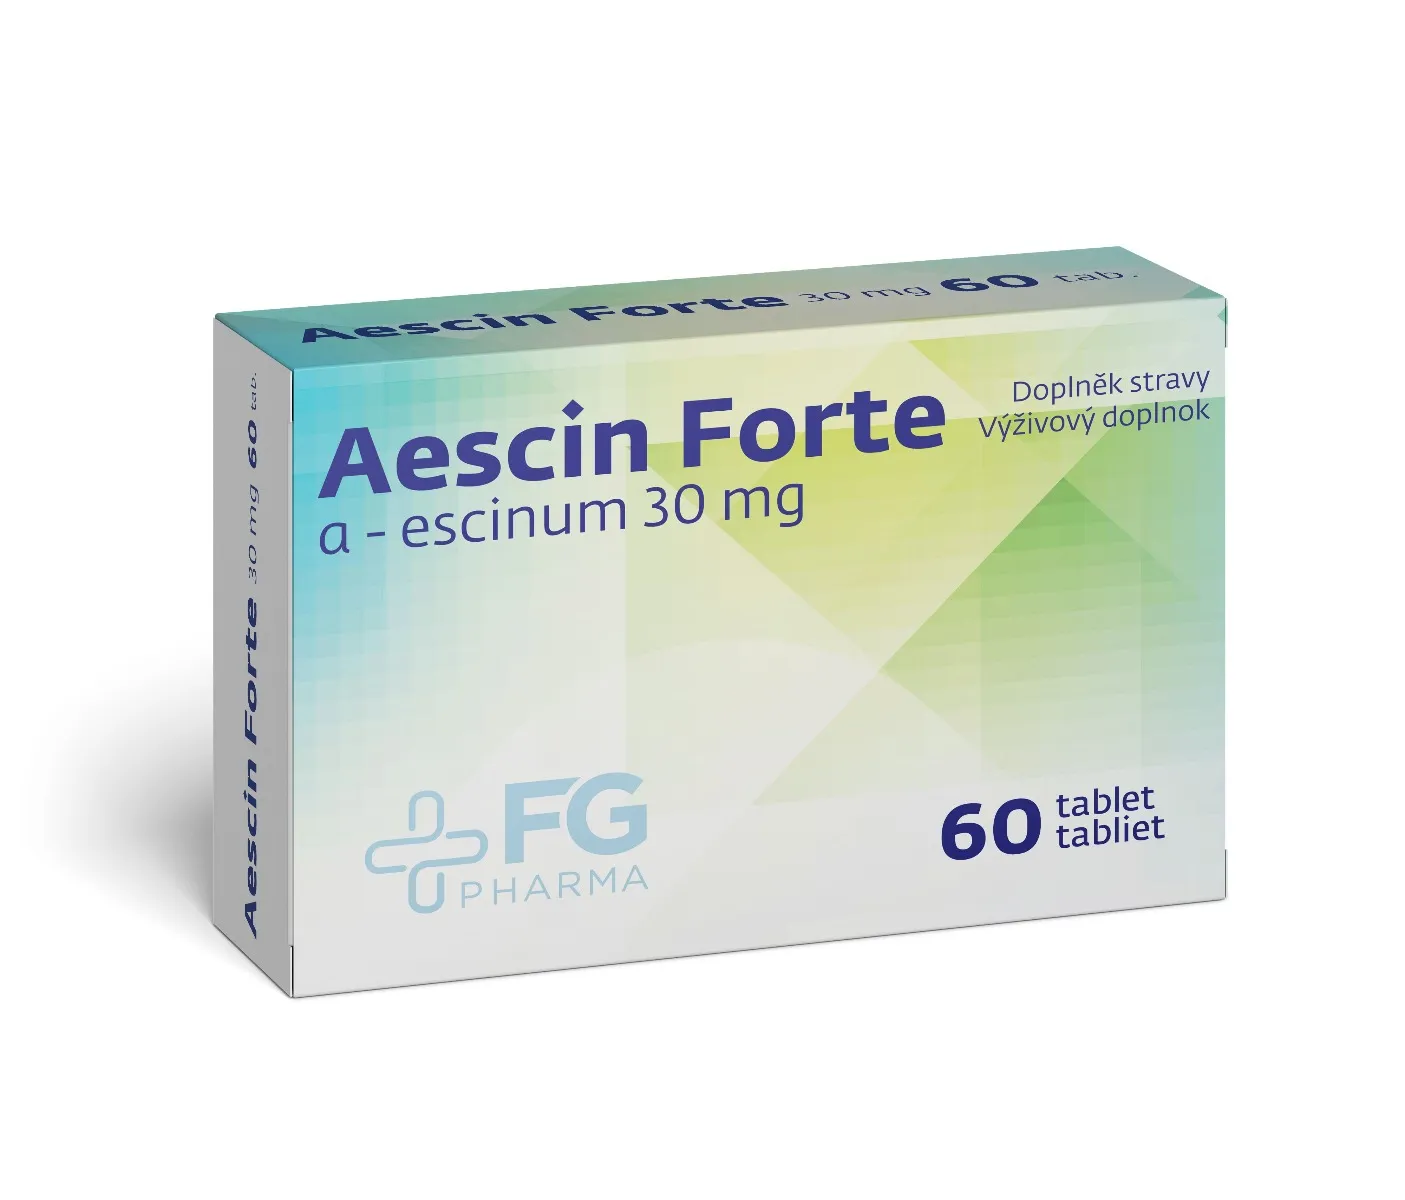 FG Pharma Aescin Forte 30 mg